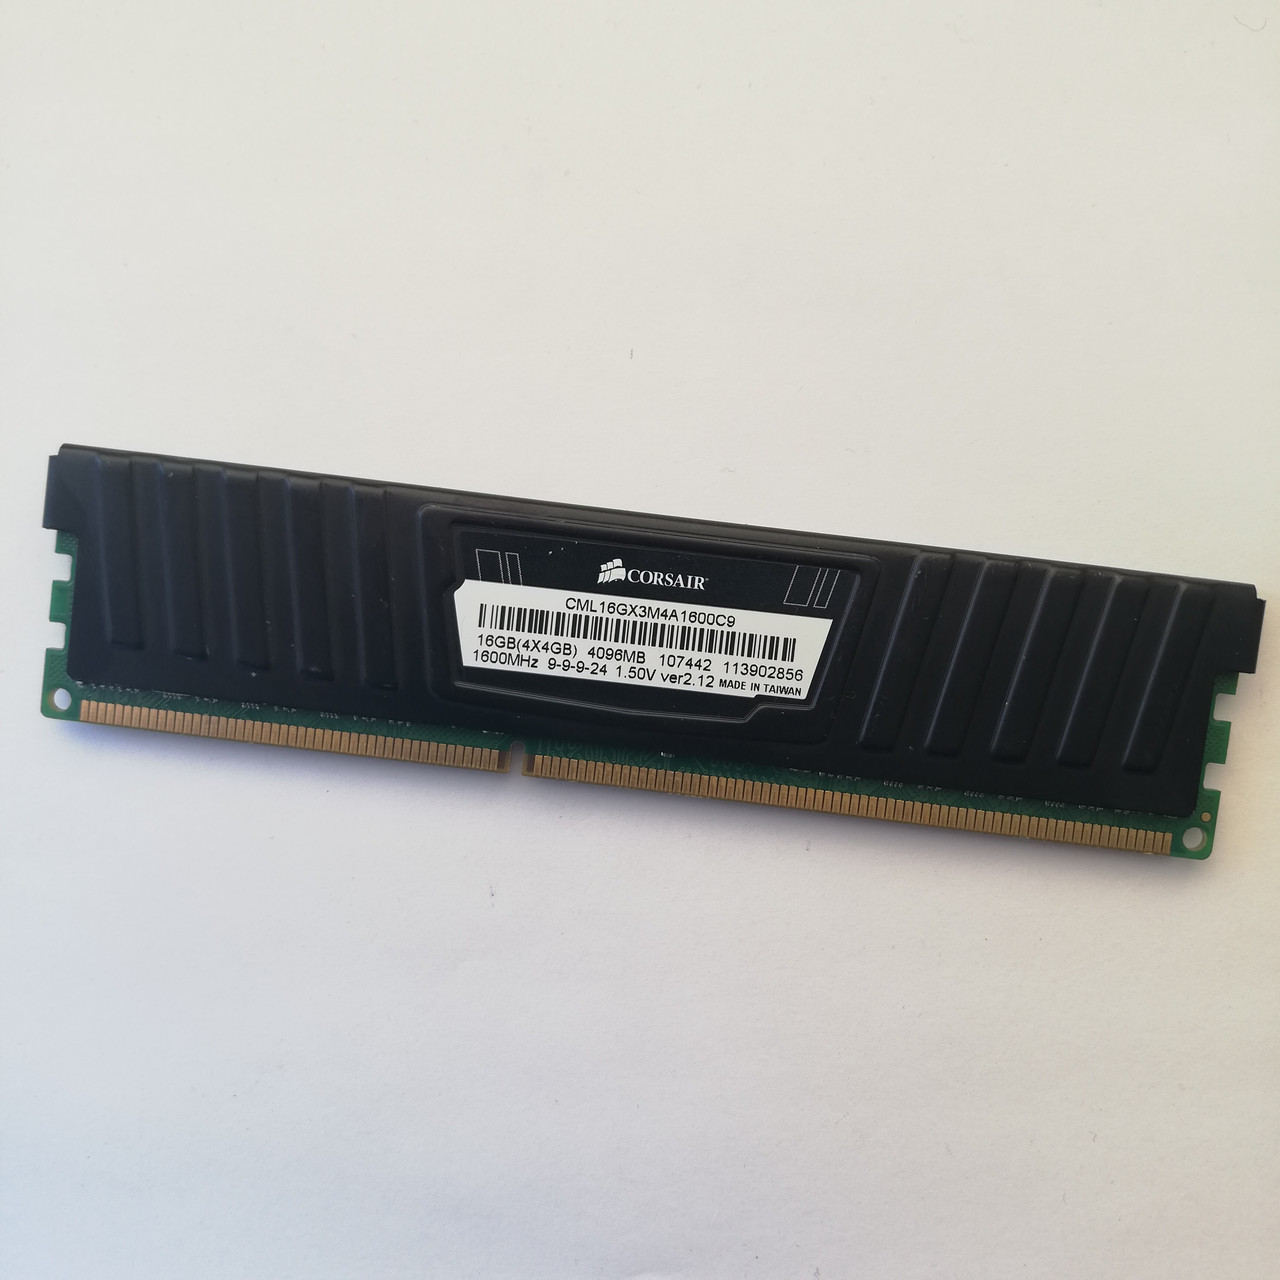 Игровая оперативная память Corsair Vengeance DDR3 4Gb 1600MHz PC3 12800U CL9 (CML16GX3M4A1600C9) Б/У, фото 1